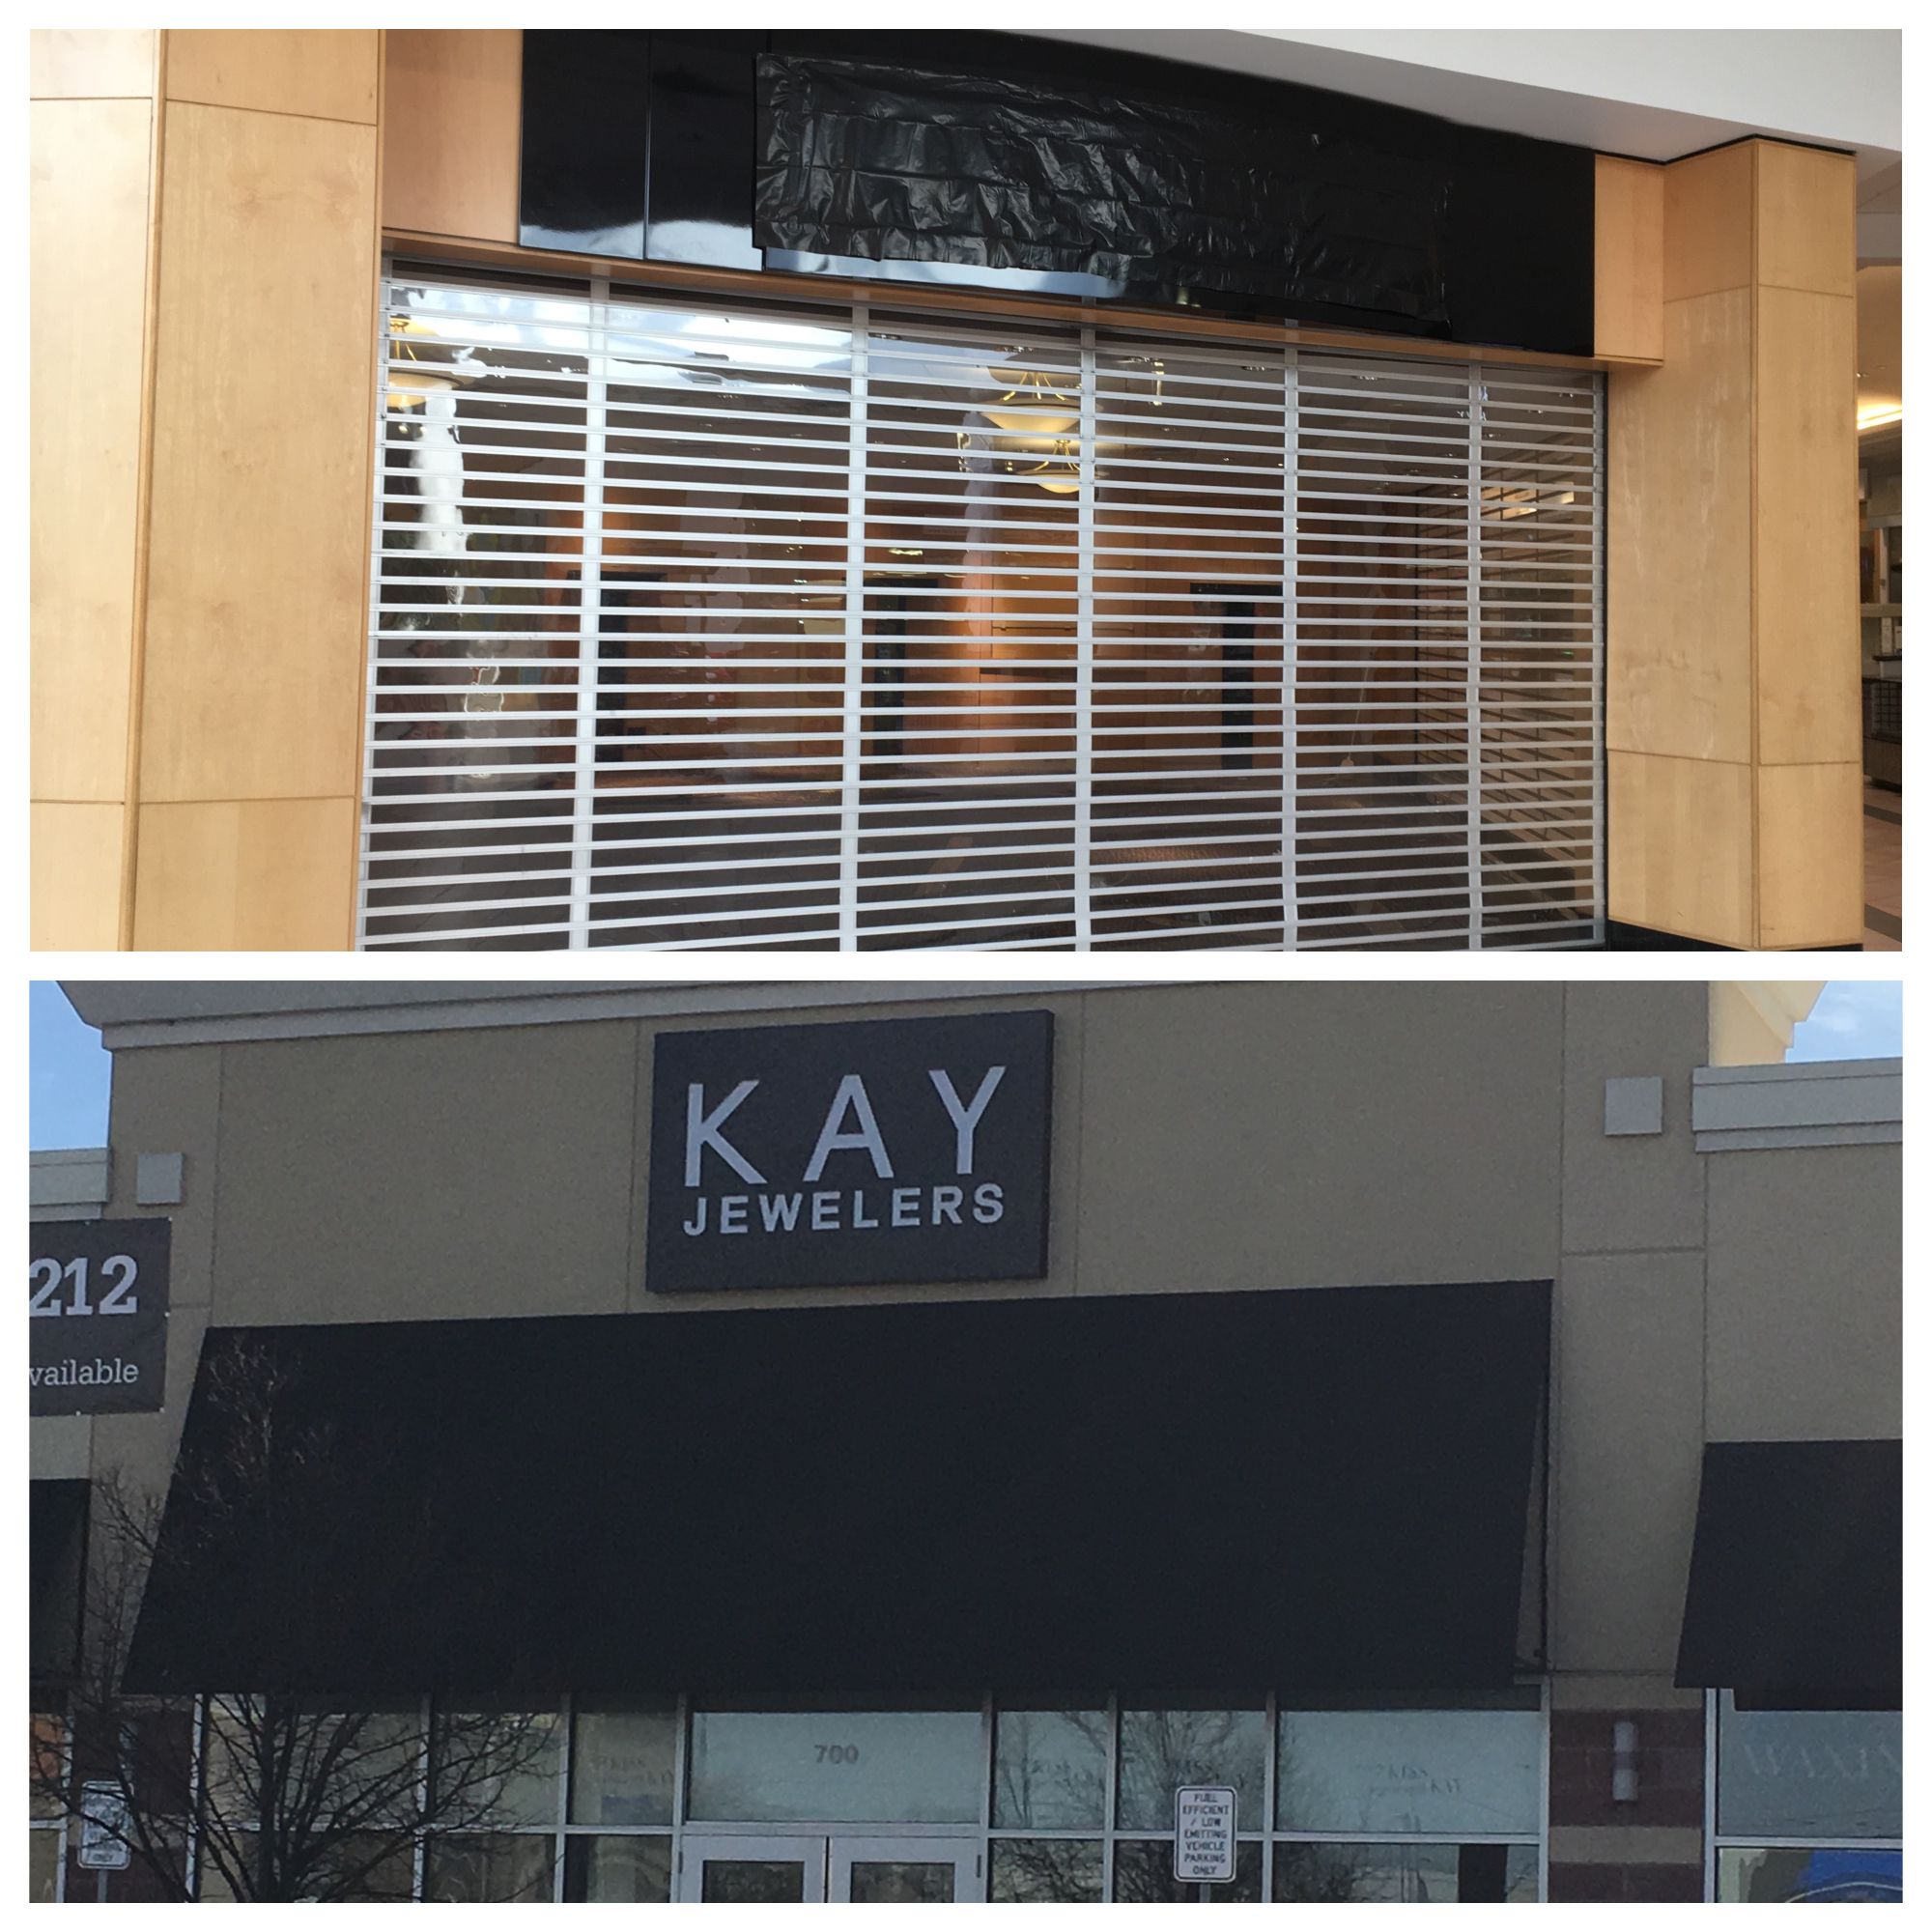 40+ Kay jewelers four seasons mall ideas in 2021 